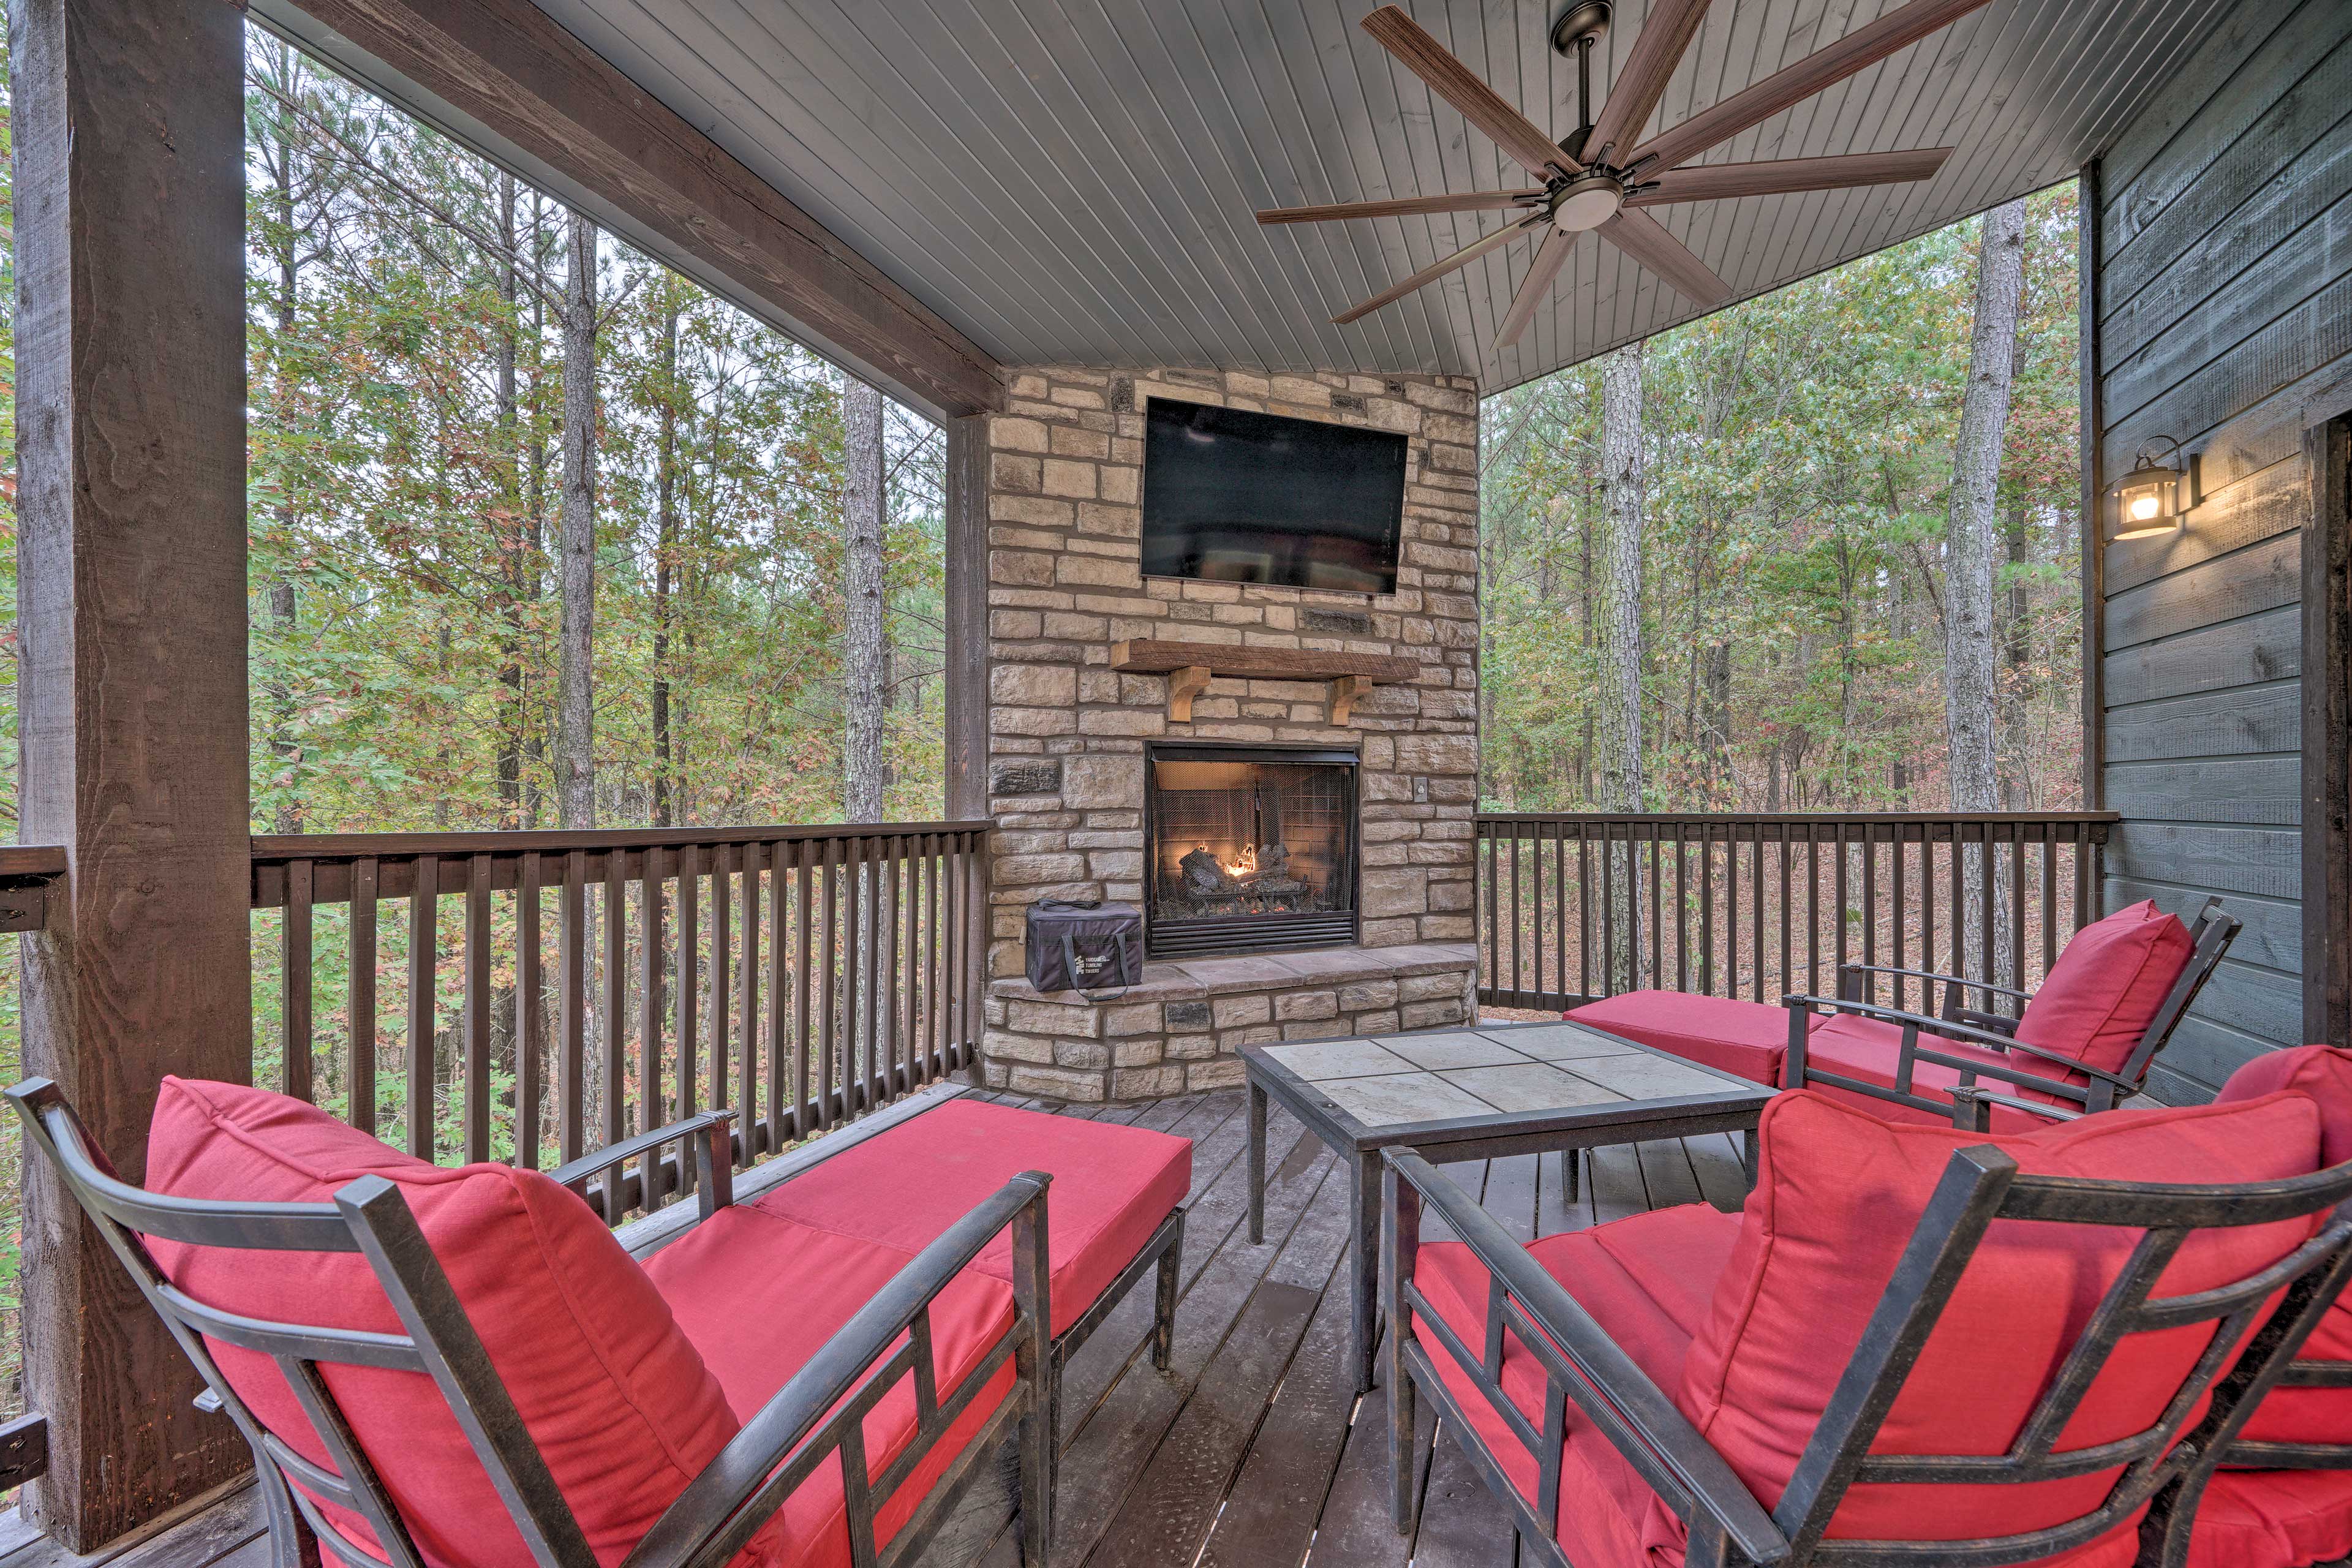 Upper Deck | Smart TV | Outdoor Fireplace (Seasonal, Available in Winter)